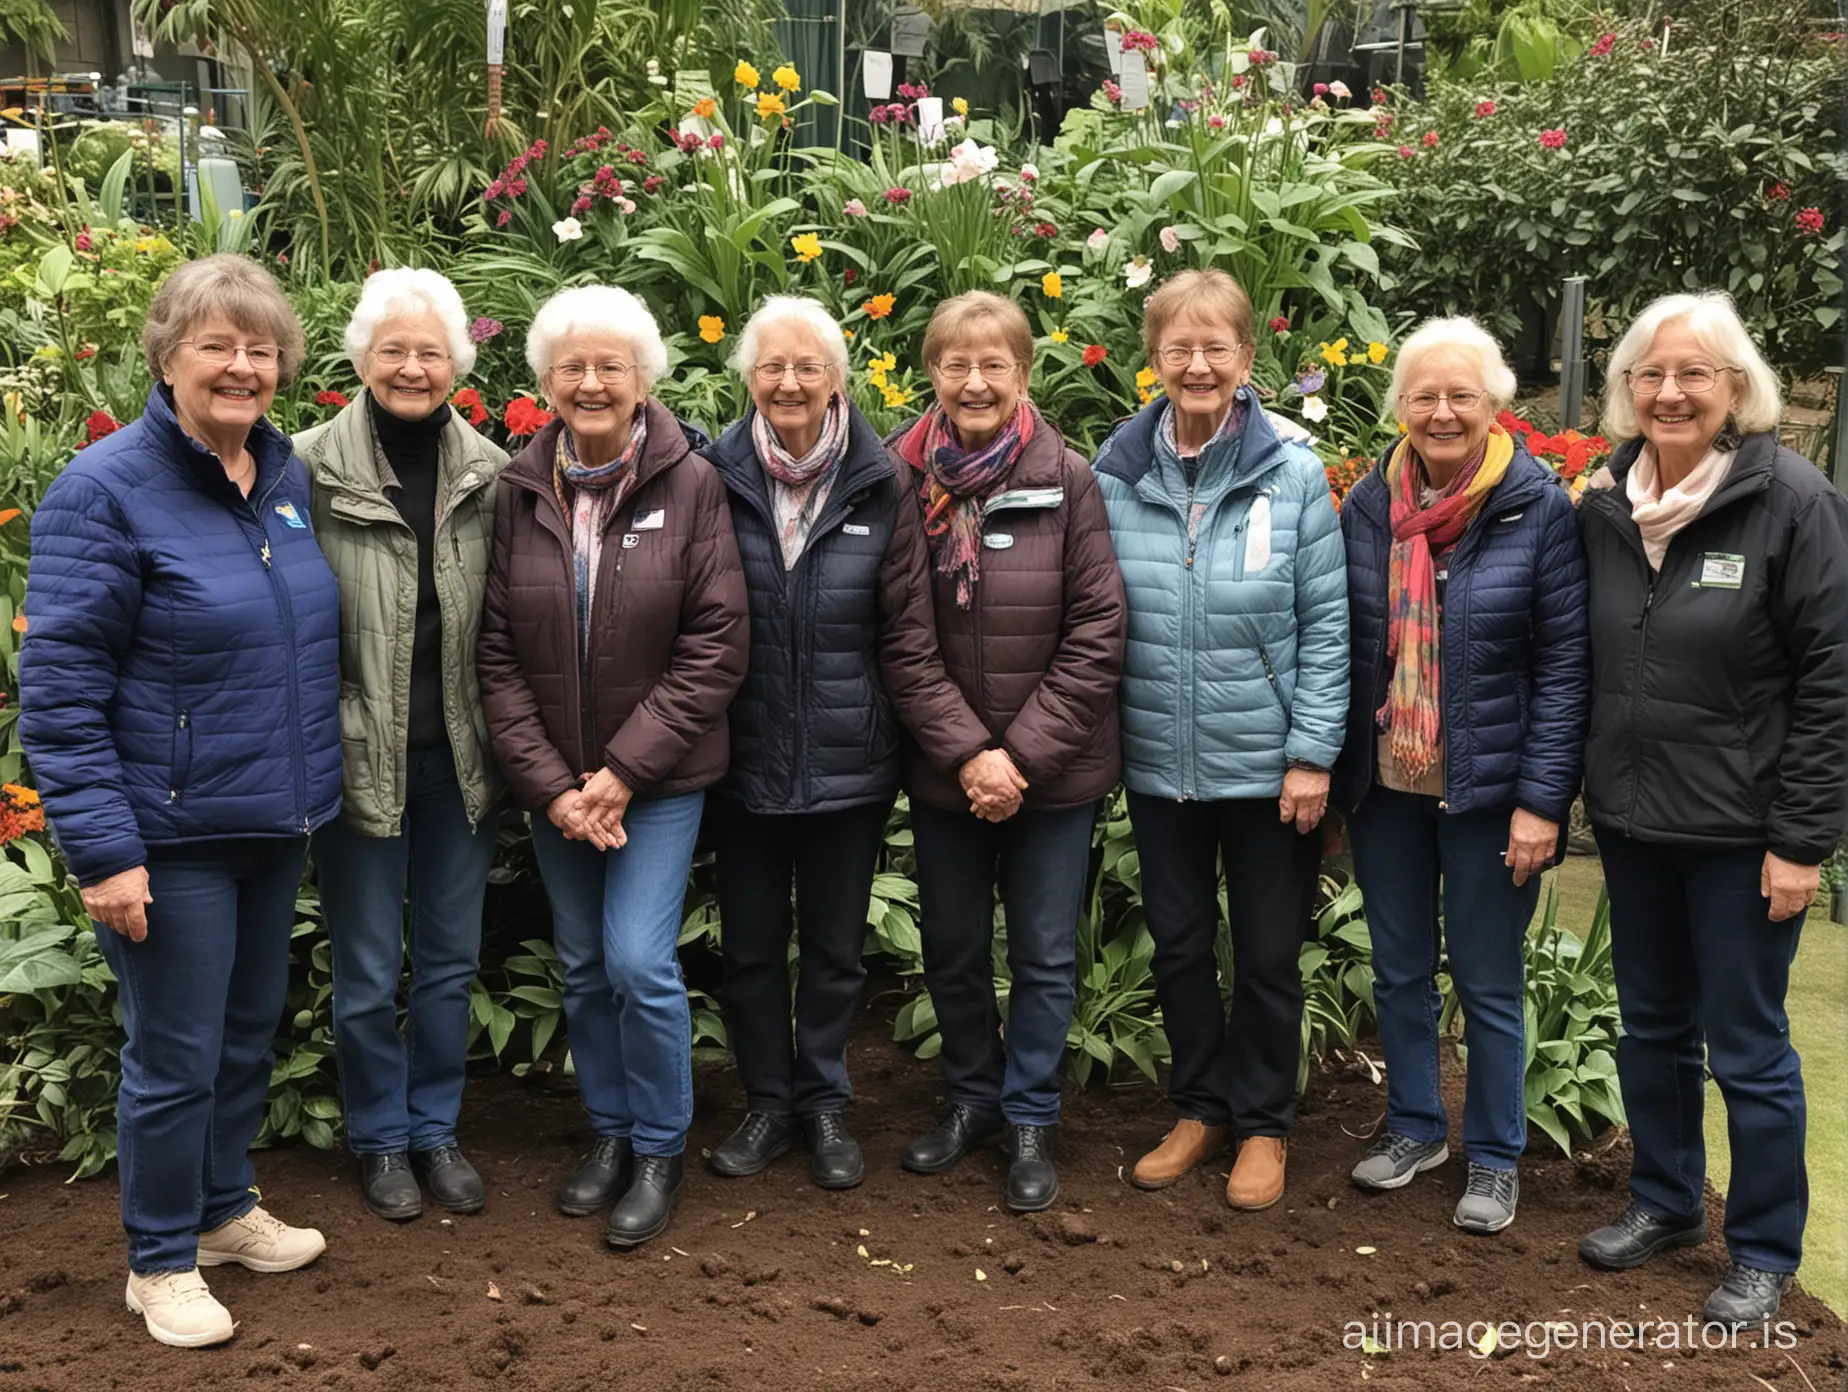 Seniors travel group at the garden show